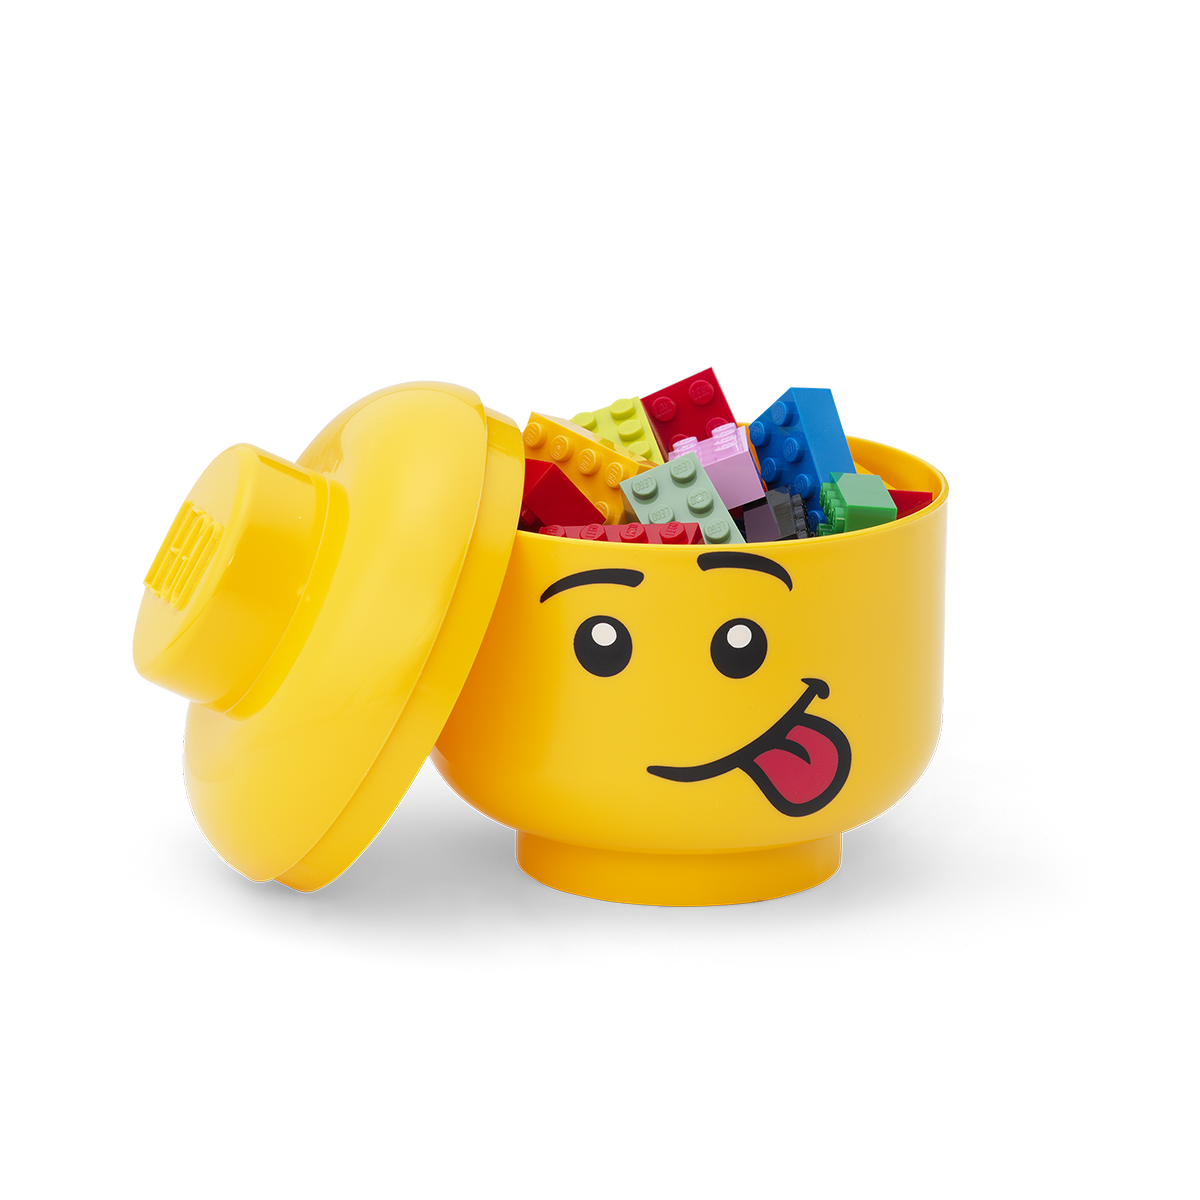 Contenedor Lego Cara Silly